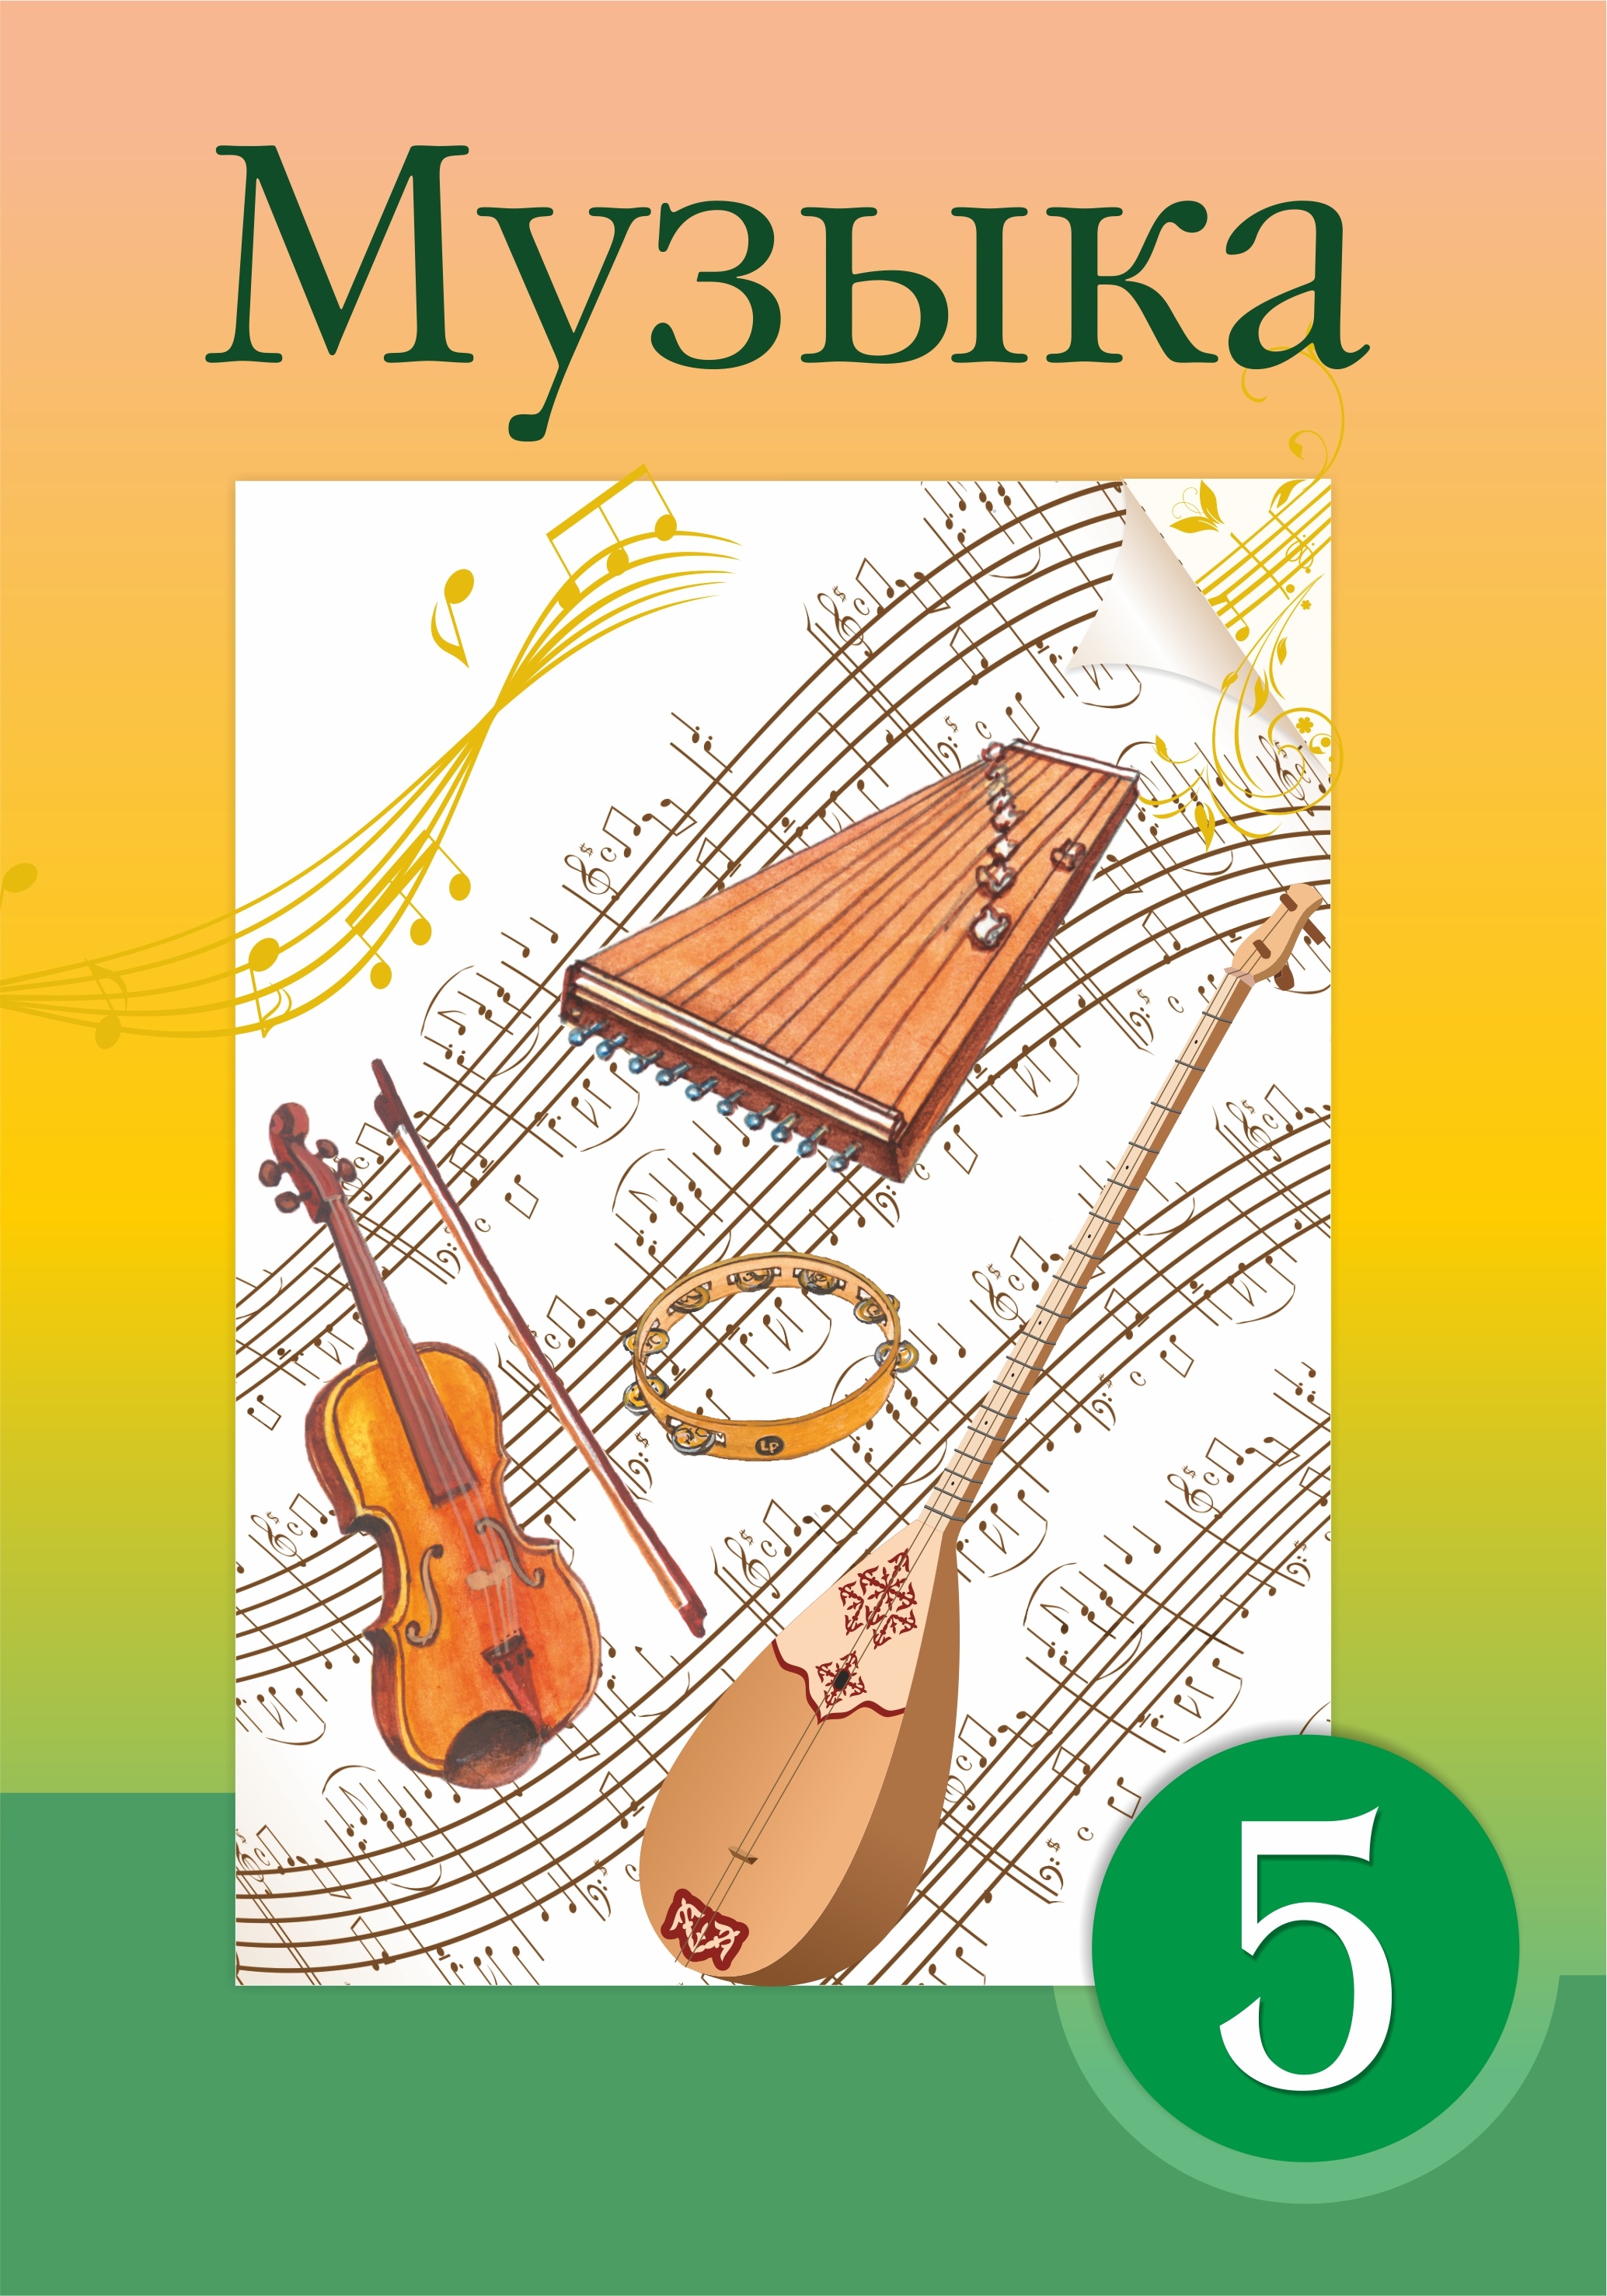 Музыка книга 6. Учебник по Музыке. Музыка. 5 Класс. Учебник. Музыкальная книга по Музыке. Учебник по Музыке 4 класс обложка.